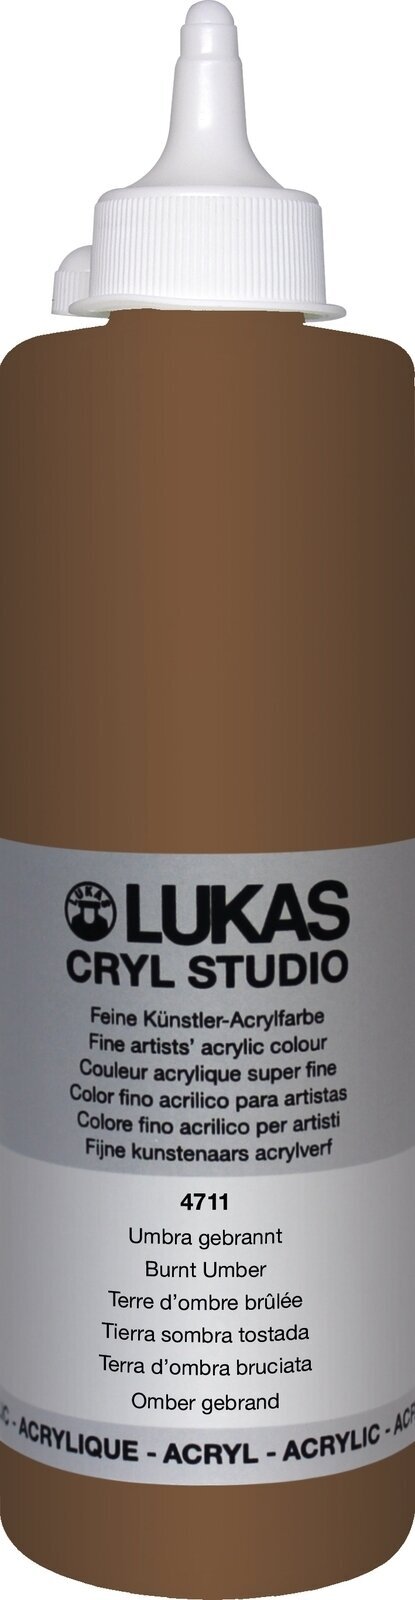 Acrylic Paint Lukas Cryl Studio Acrylic Paint Plastic Bottle Acrylic Paint Burnt Umber 500 ml 1 pc